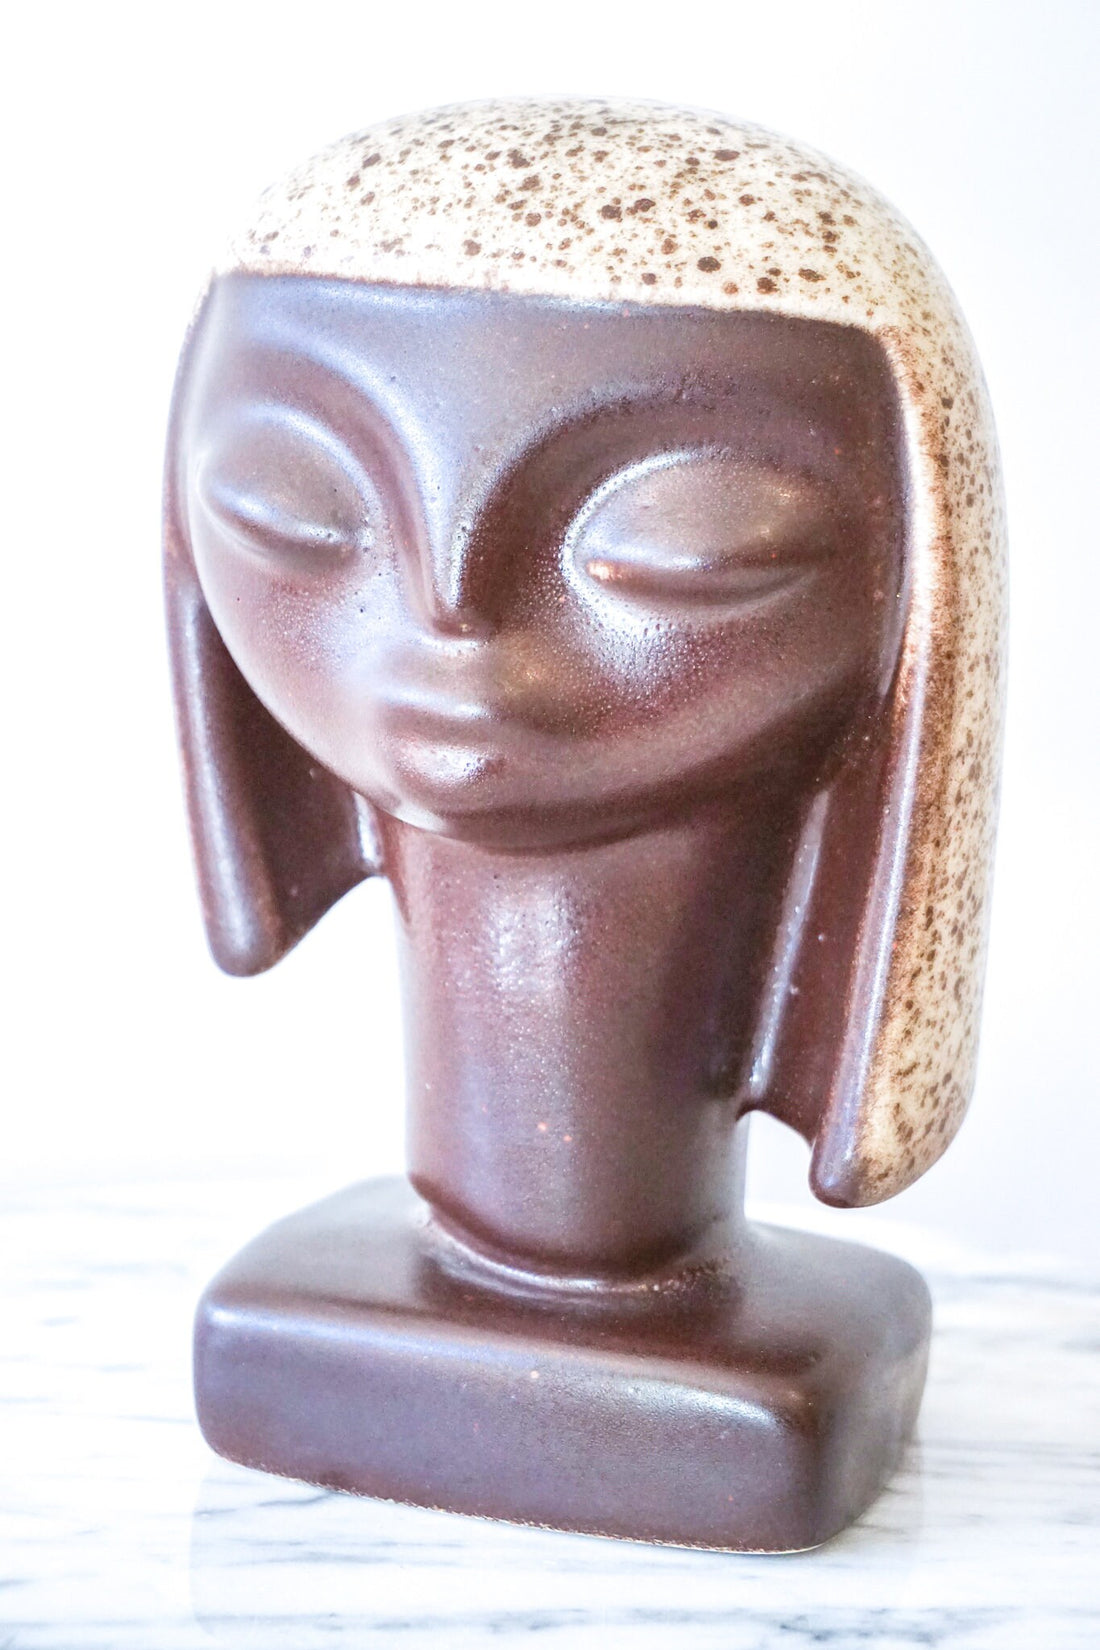 Howard Pierce Sculptural Ceramic Head Bust